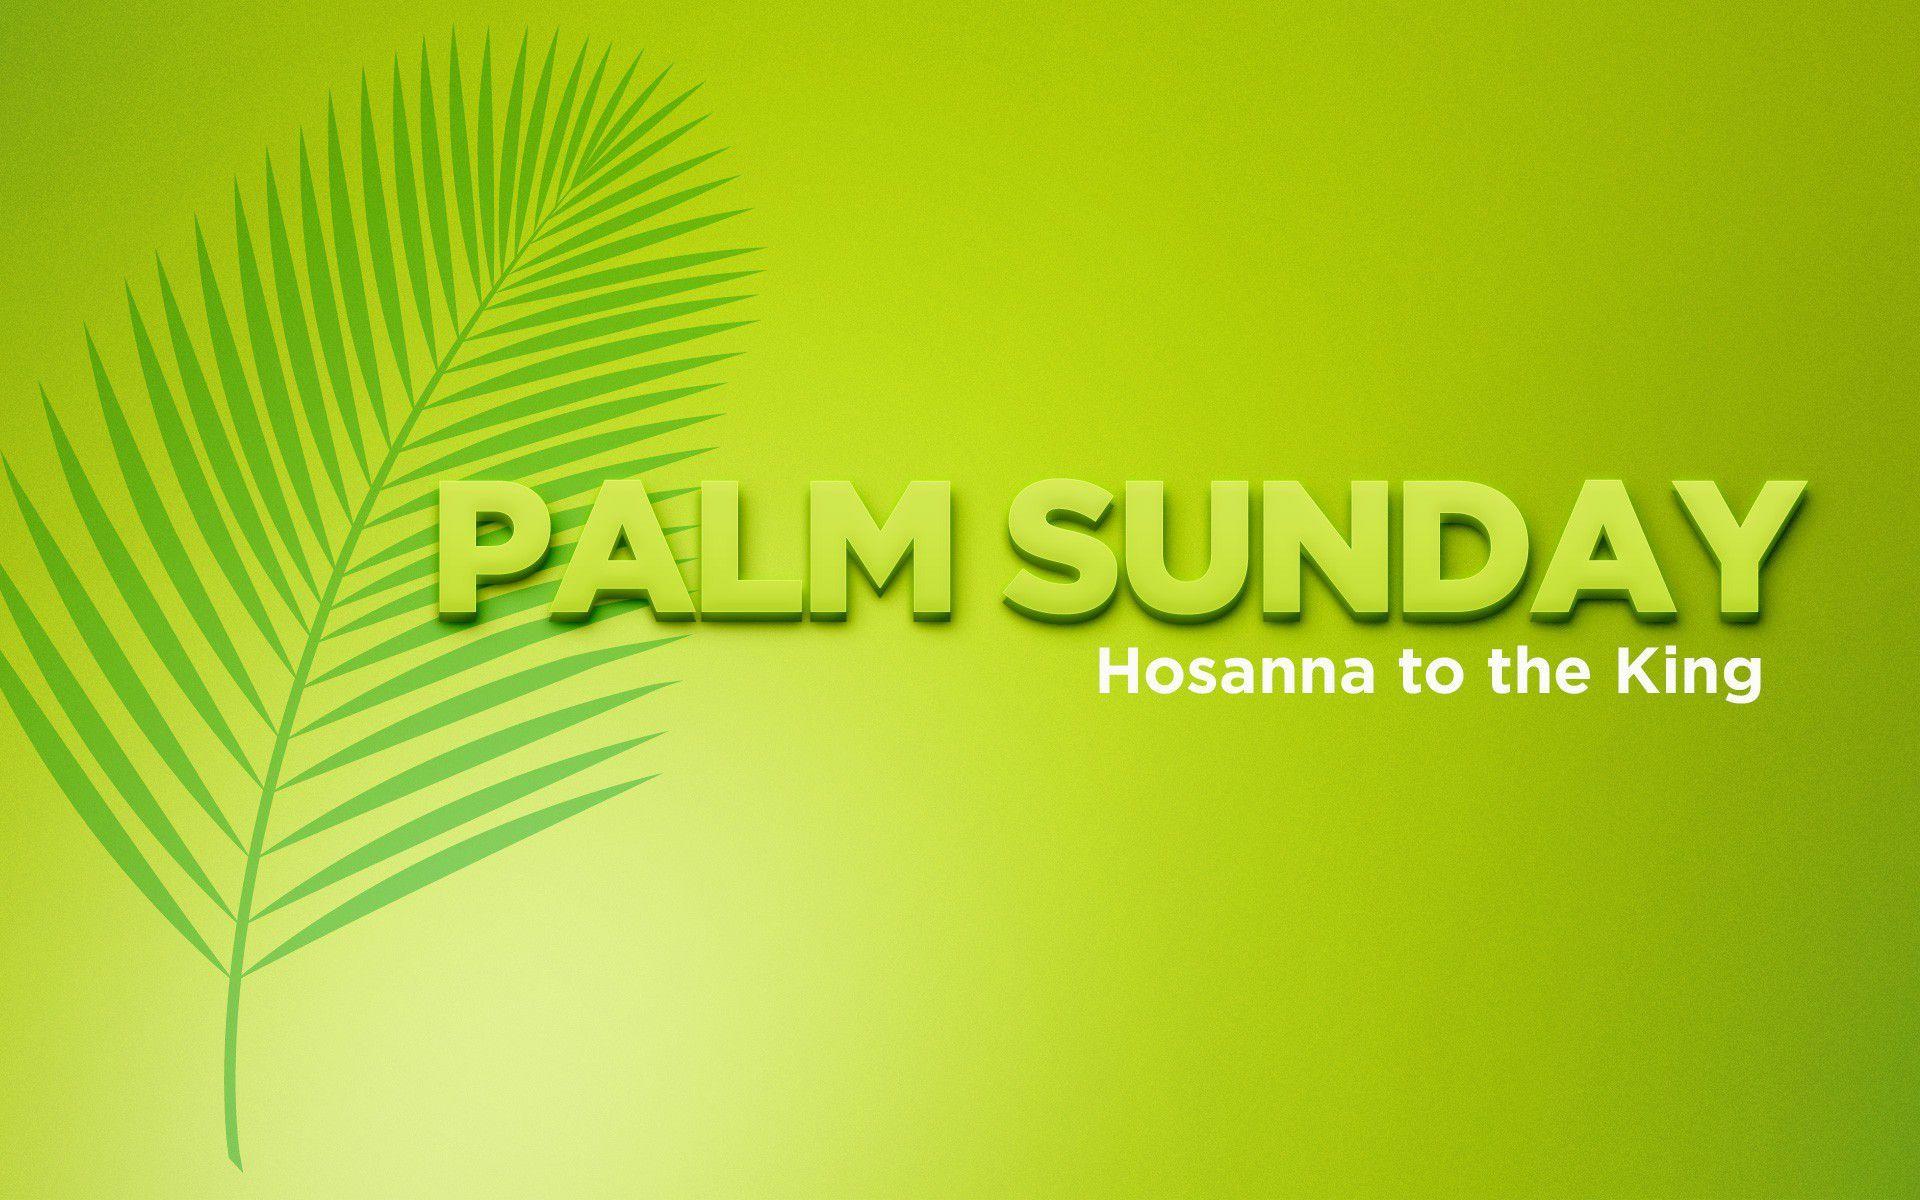 Palm Sunday Wallpaper Free Download